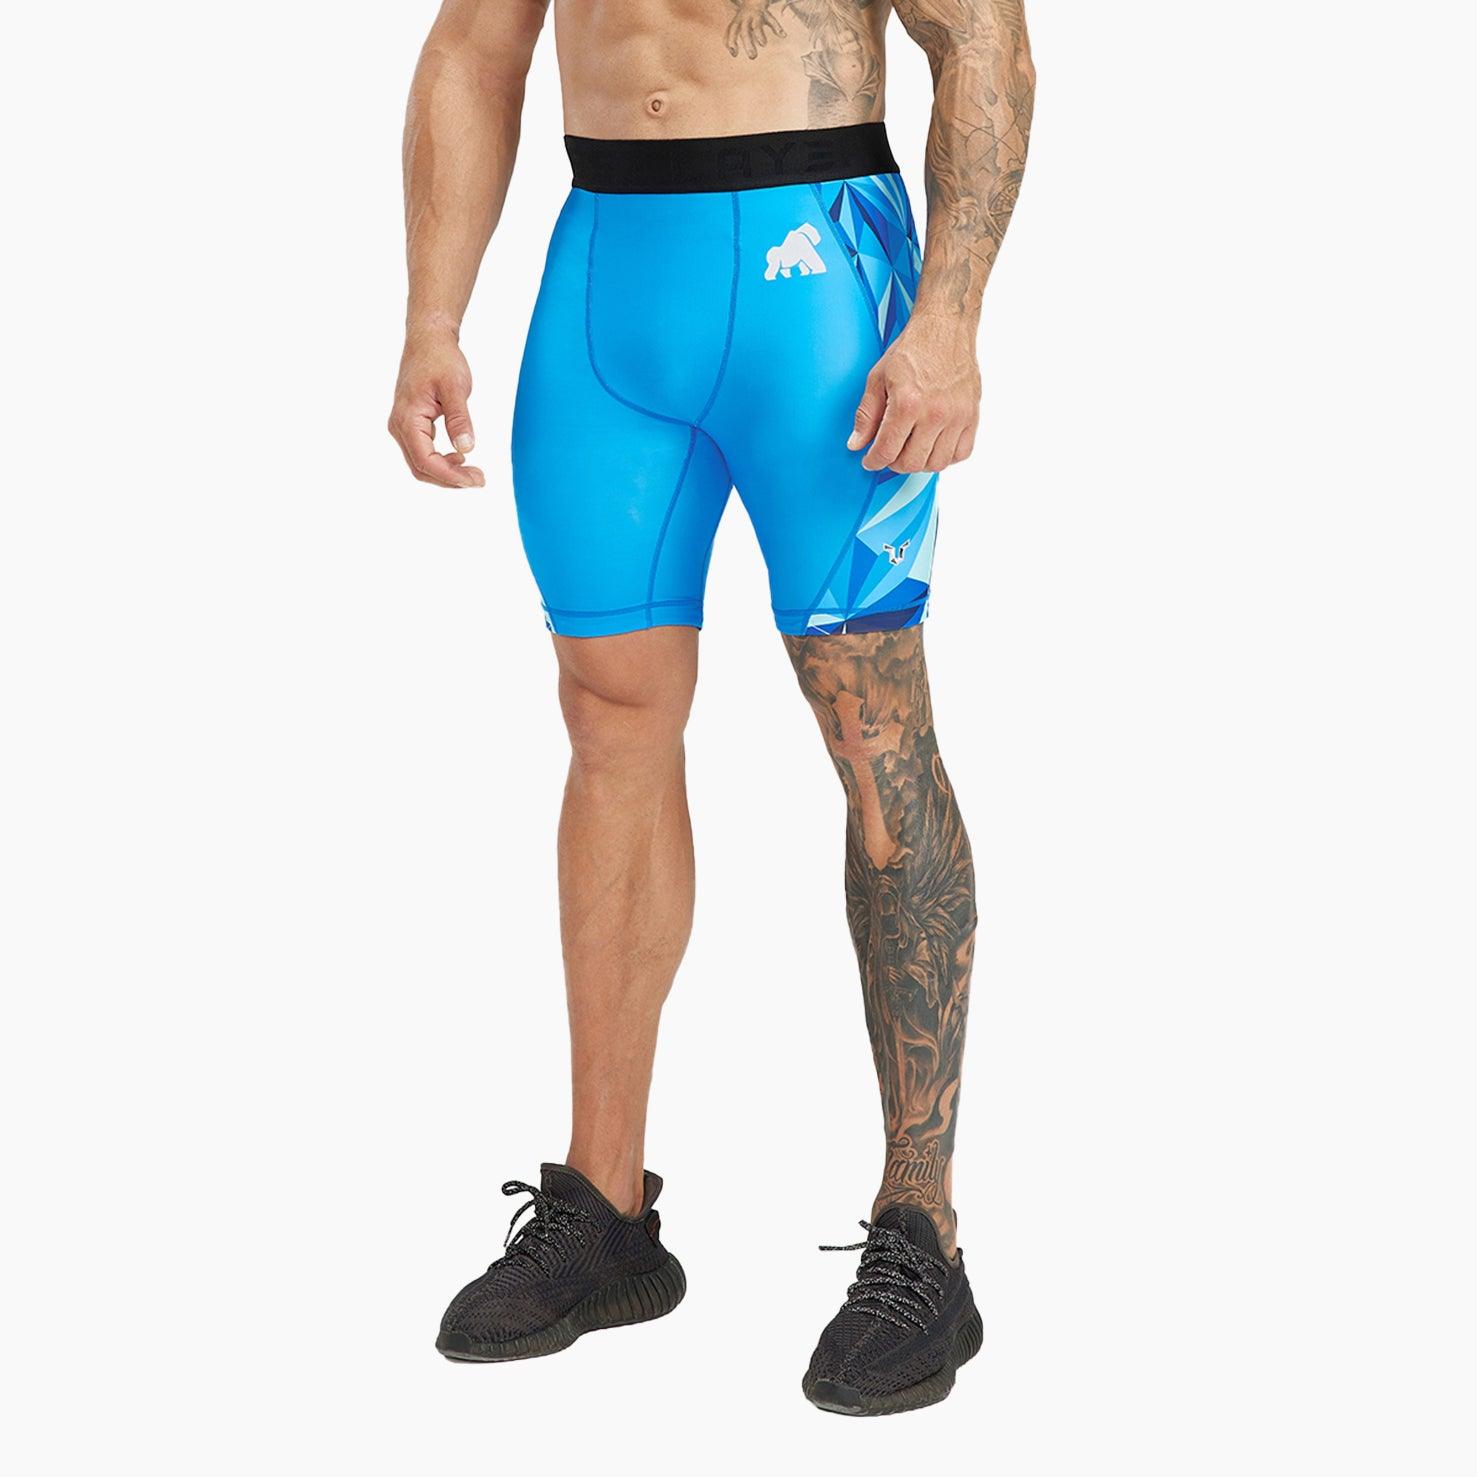 Men's Swimming Compression Shorts